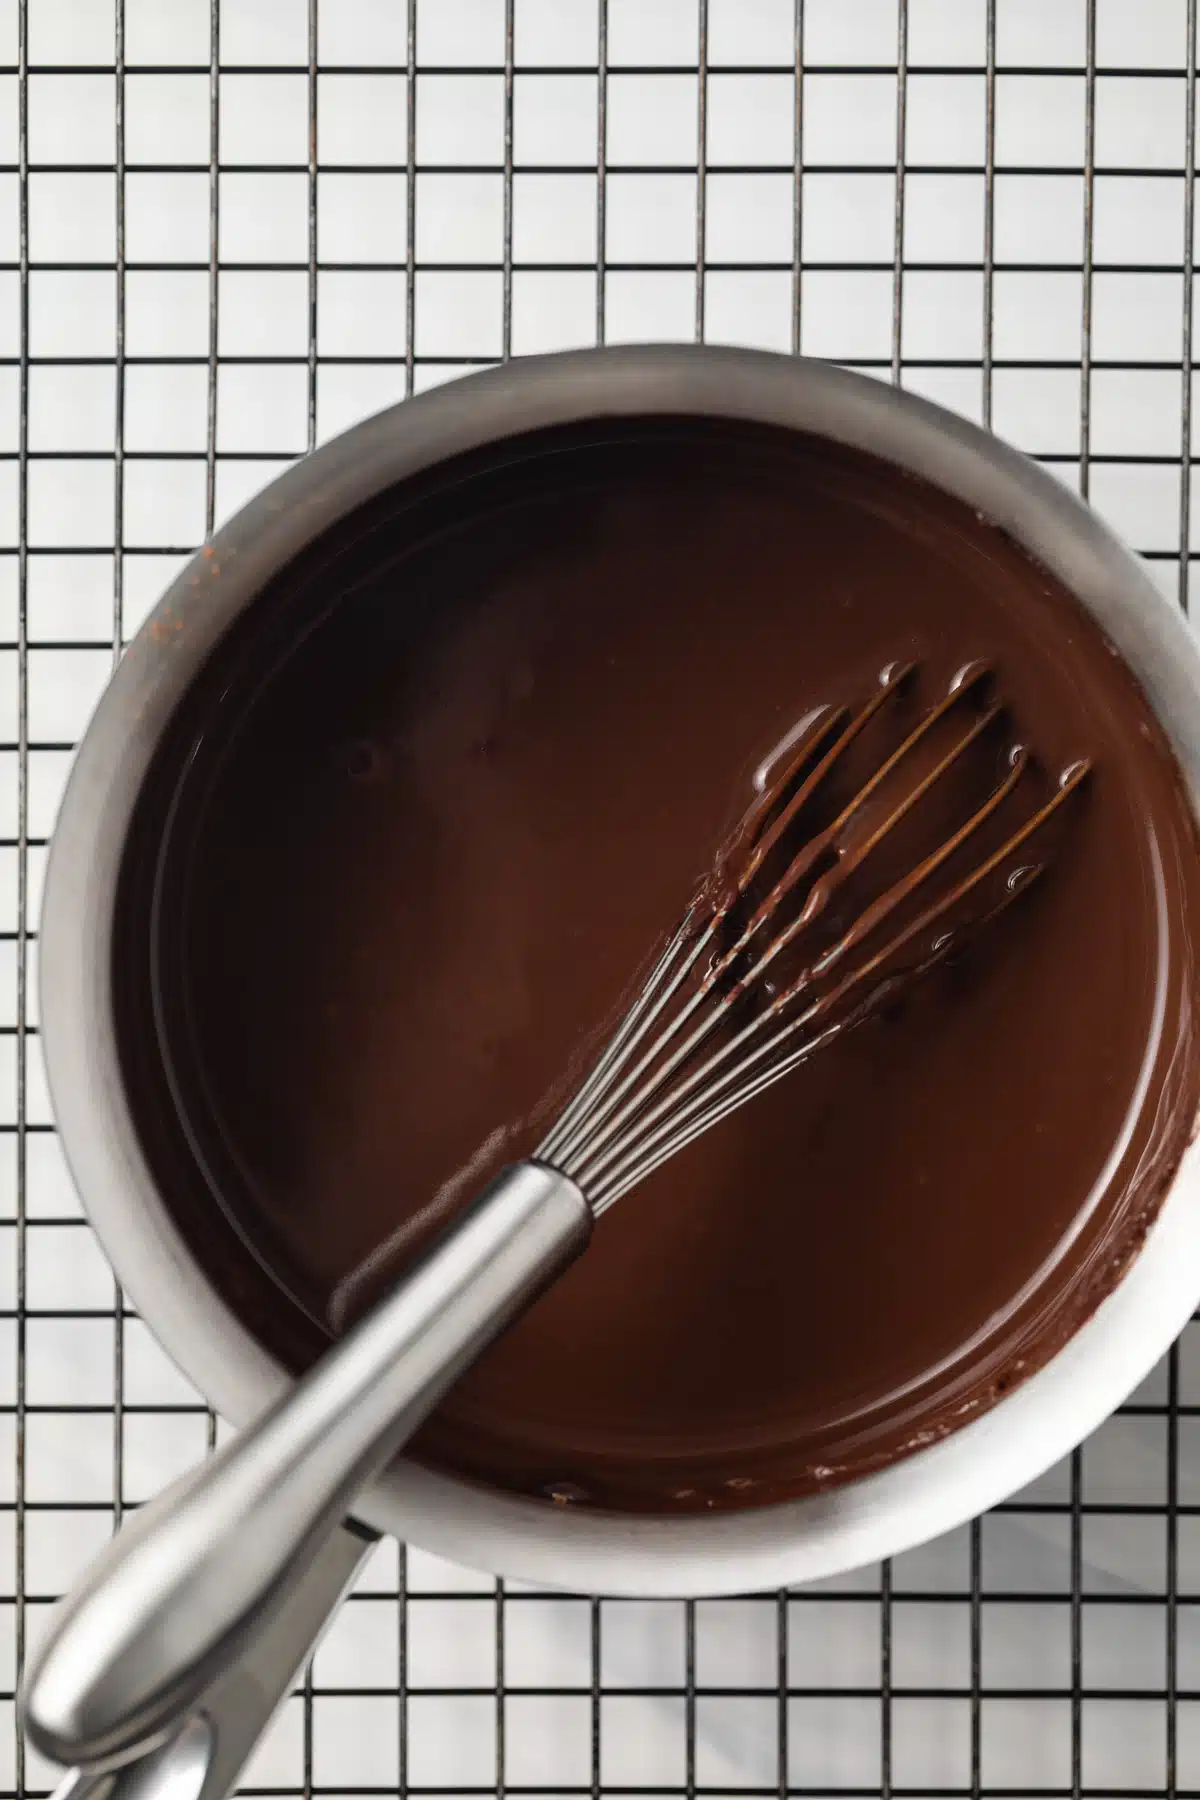 Chocolate sauce in saucepan.